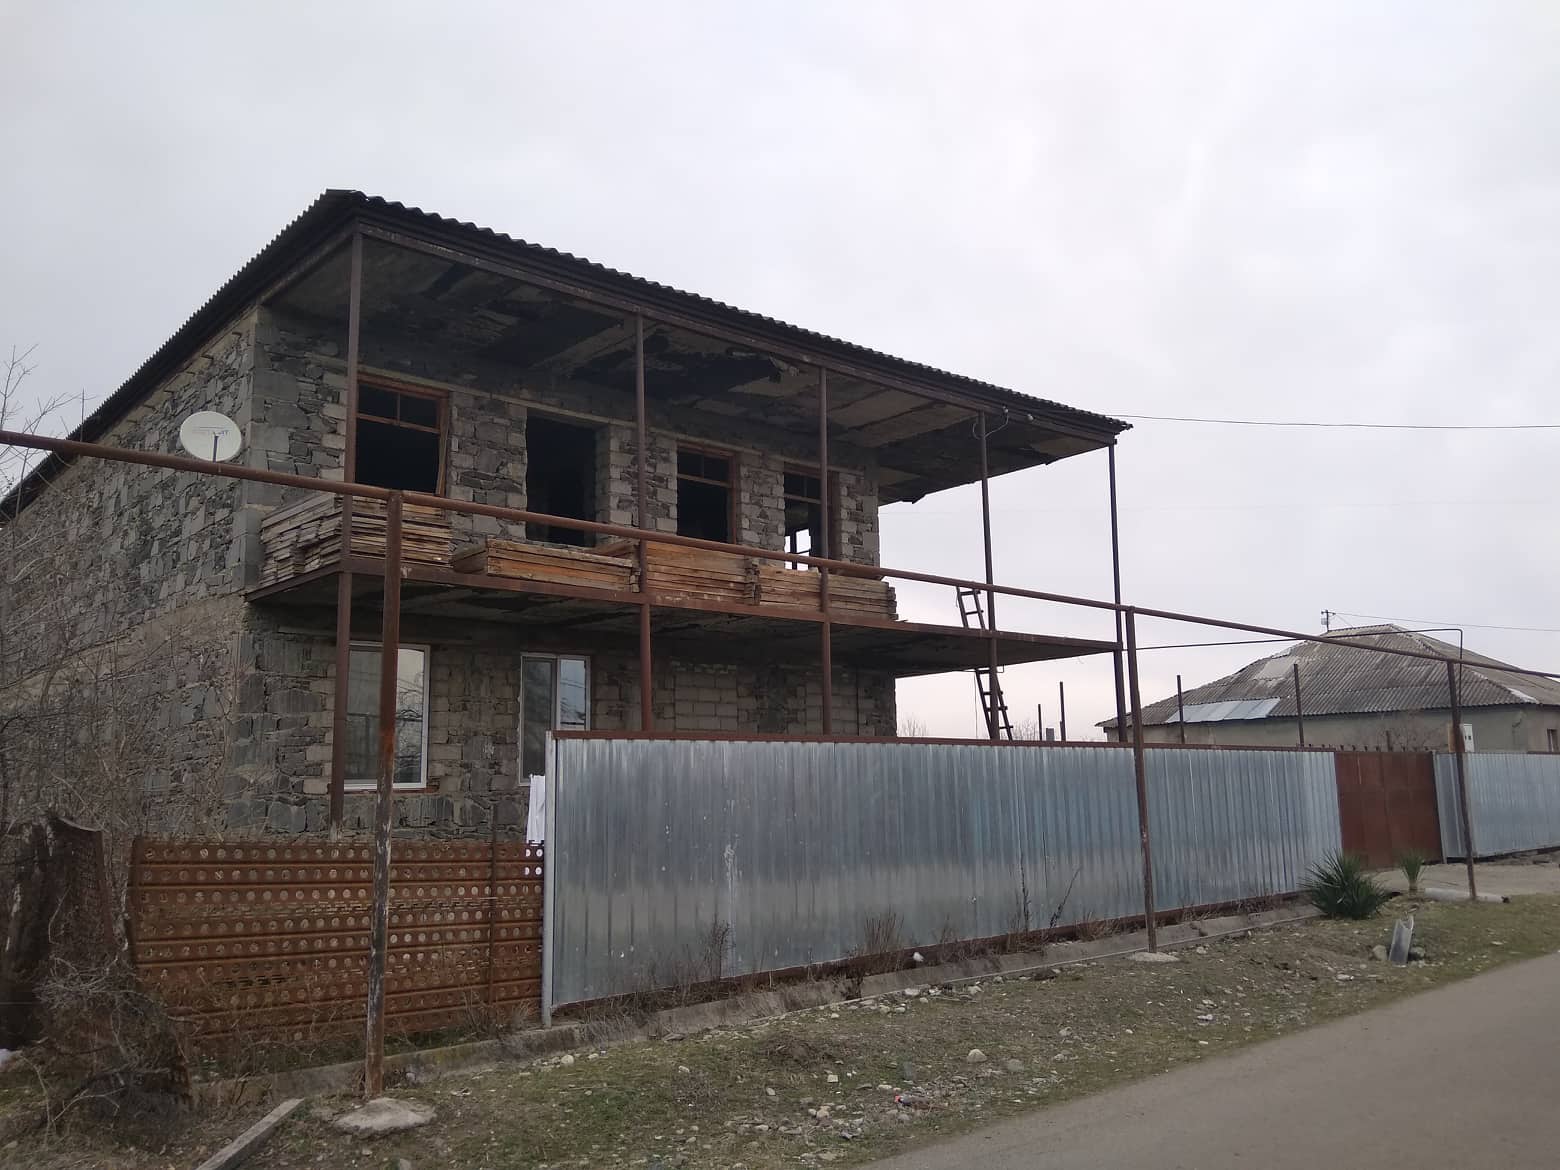 Nadibaidze family’s new house in Tamarisi. It is still under construction